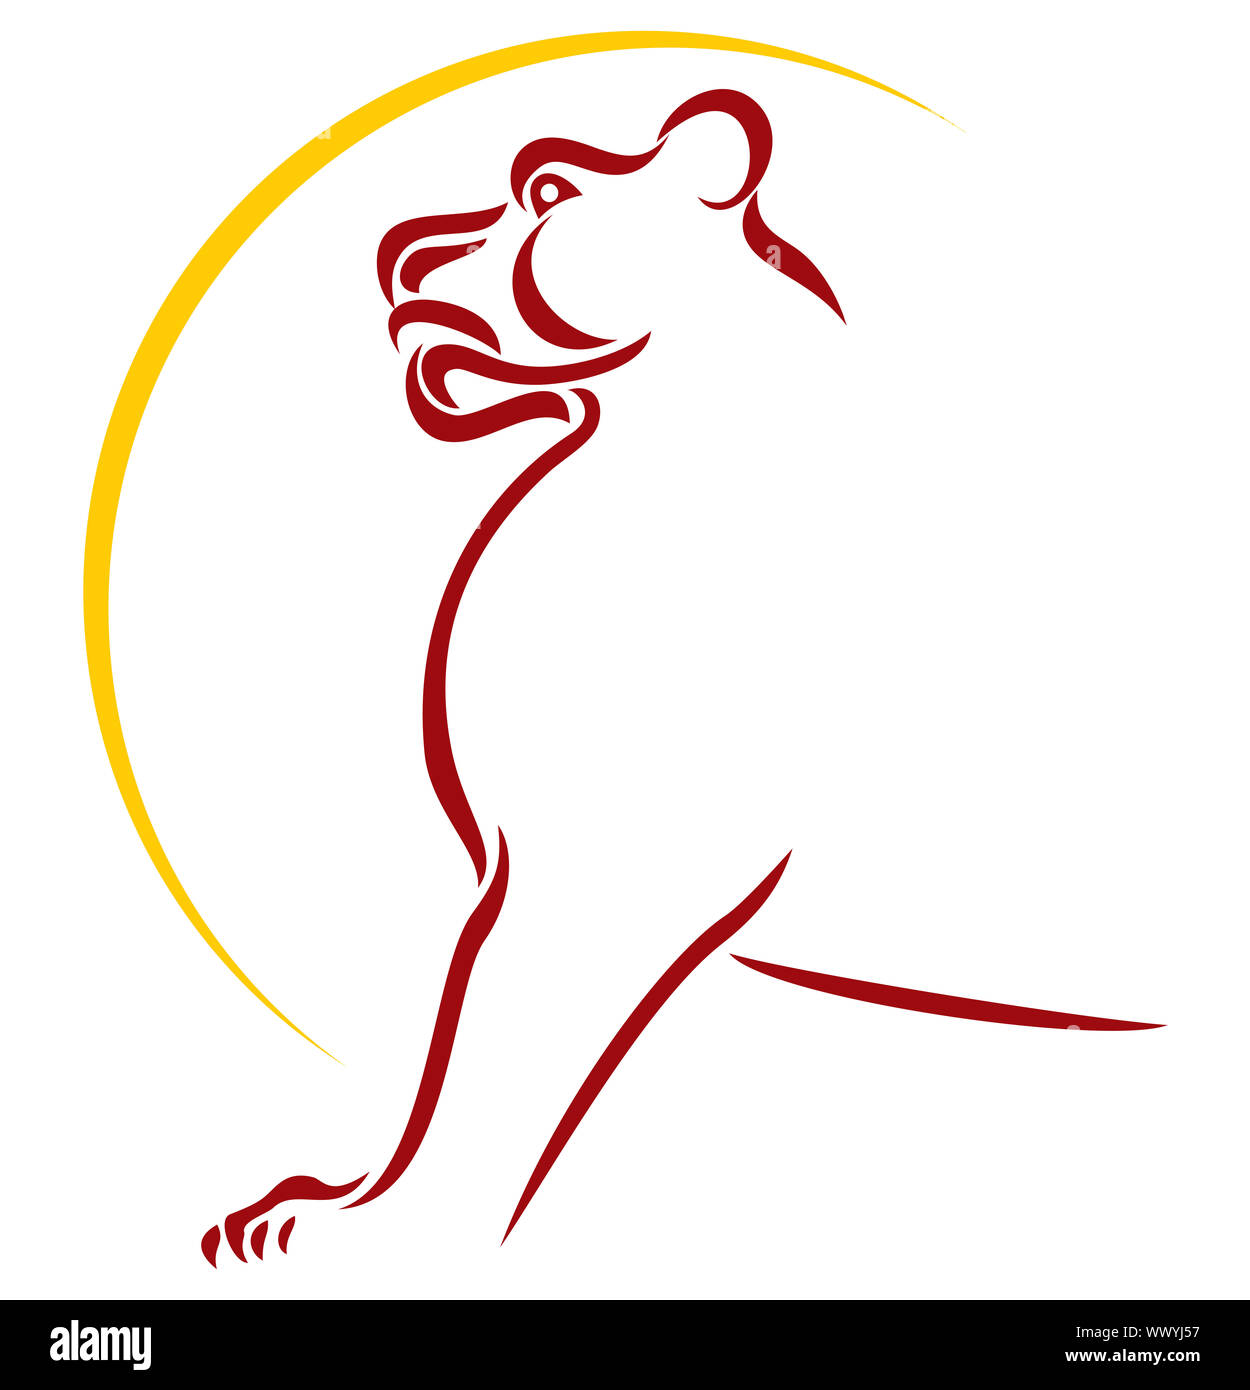 Lion symbol Stock Photo